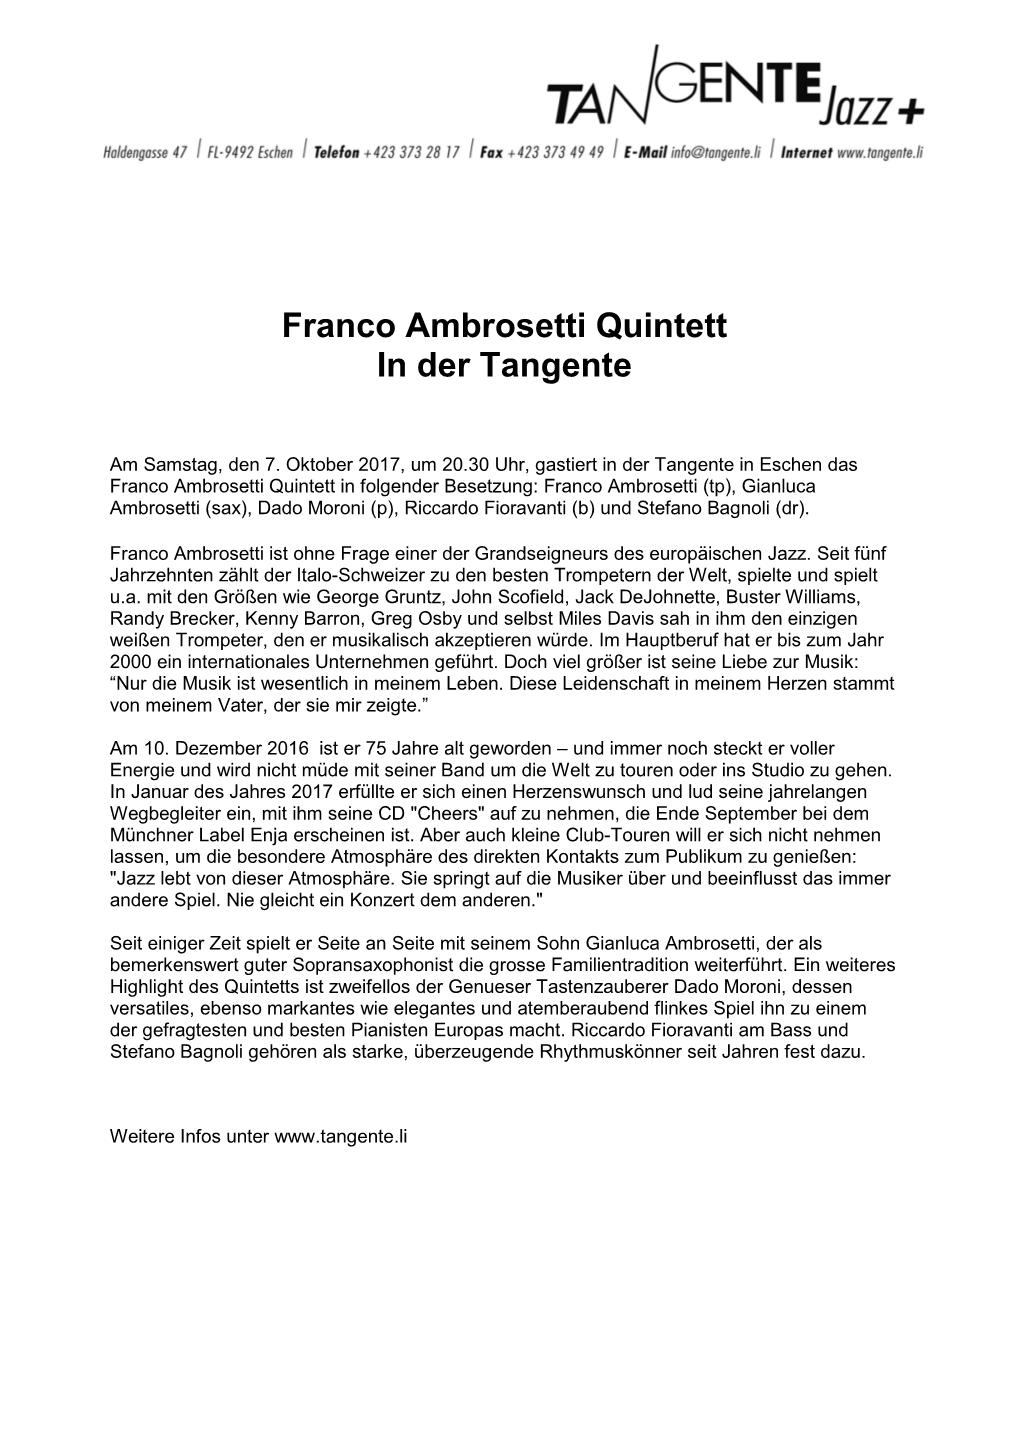 Franco Ambrosetti Quintett in Der Tangente